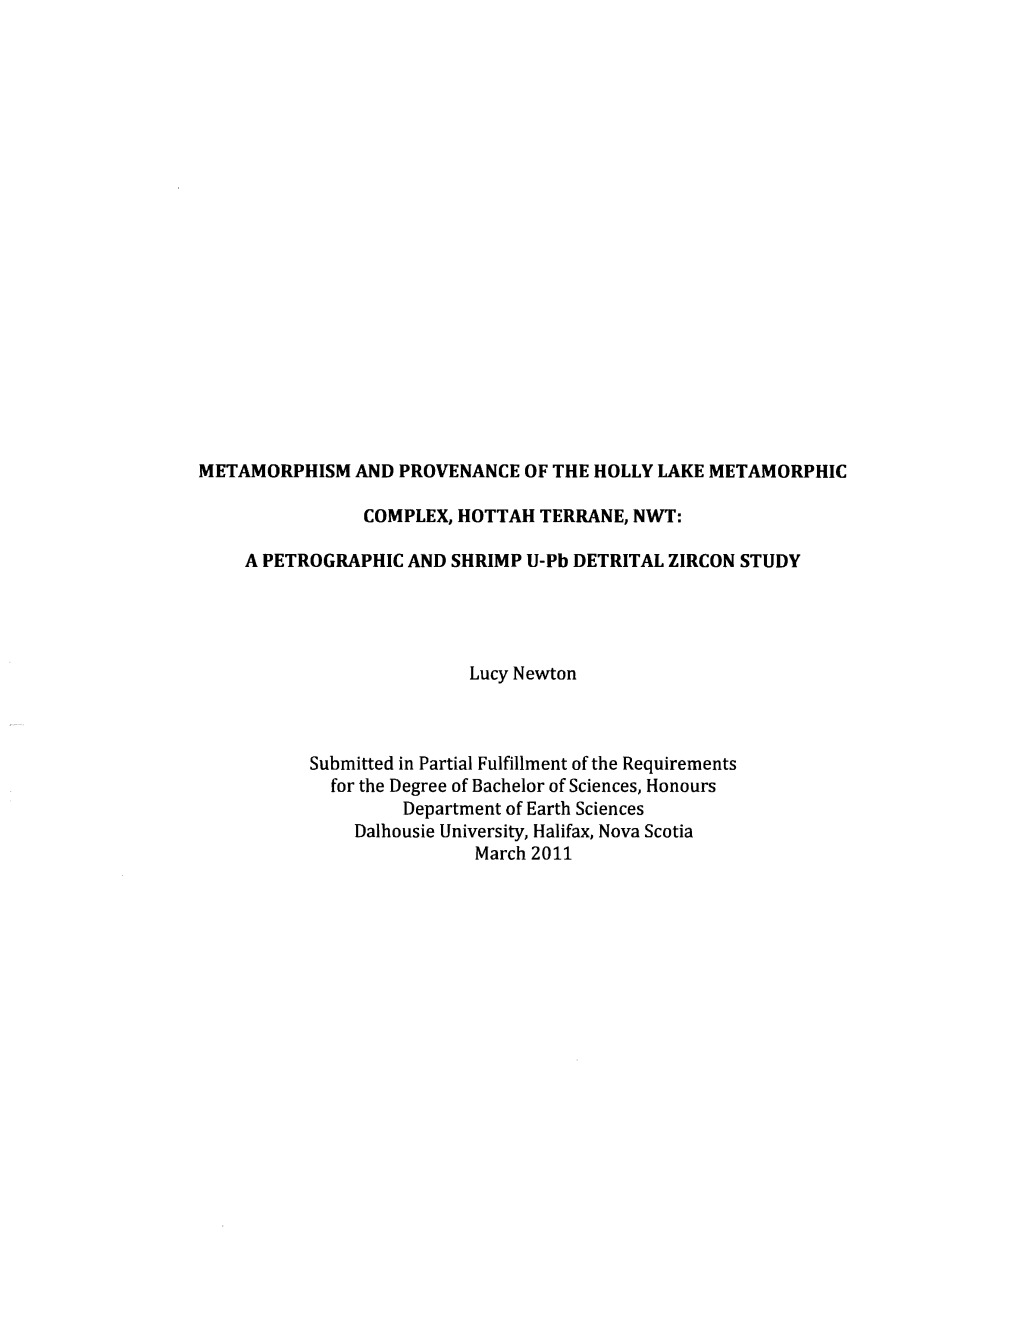 METAMORPHISM and PROVENANCE of the HOLLY LAKE METAMORPHIC COMPLEX, HOTTAH TERRANE, NWT: a PETROGRAPHIC and SHRIMP U-Pb DETRITAL